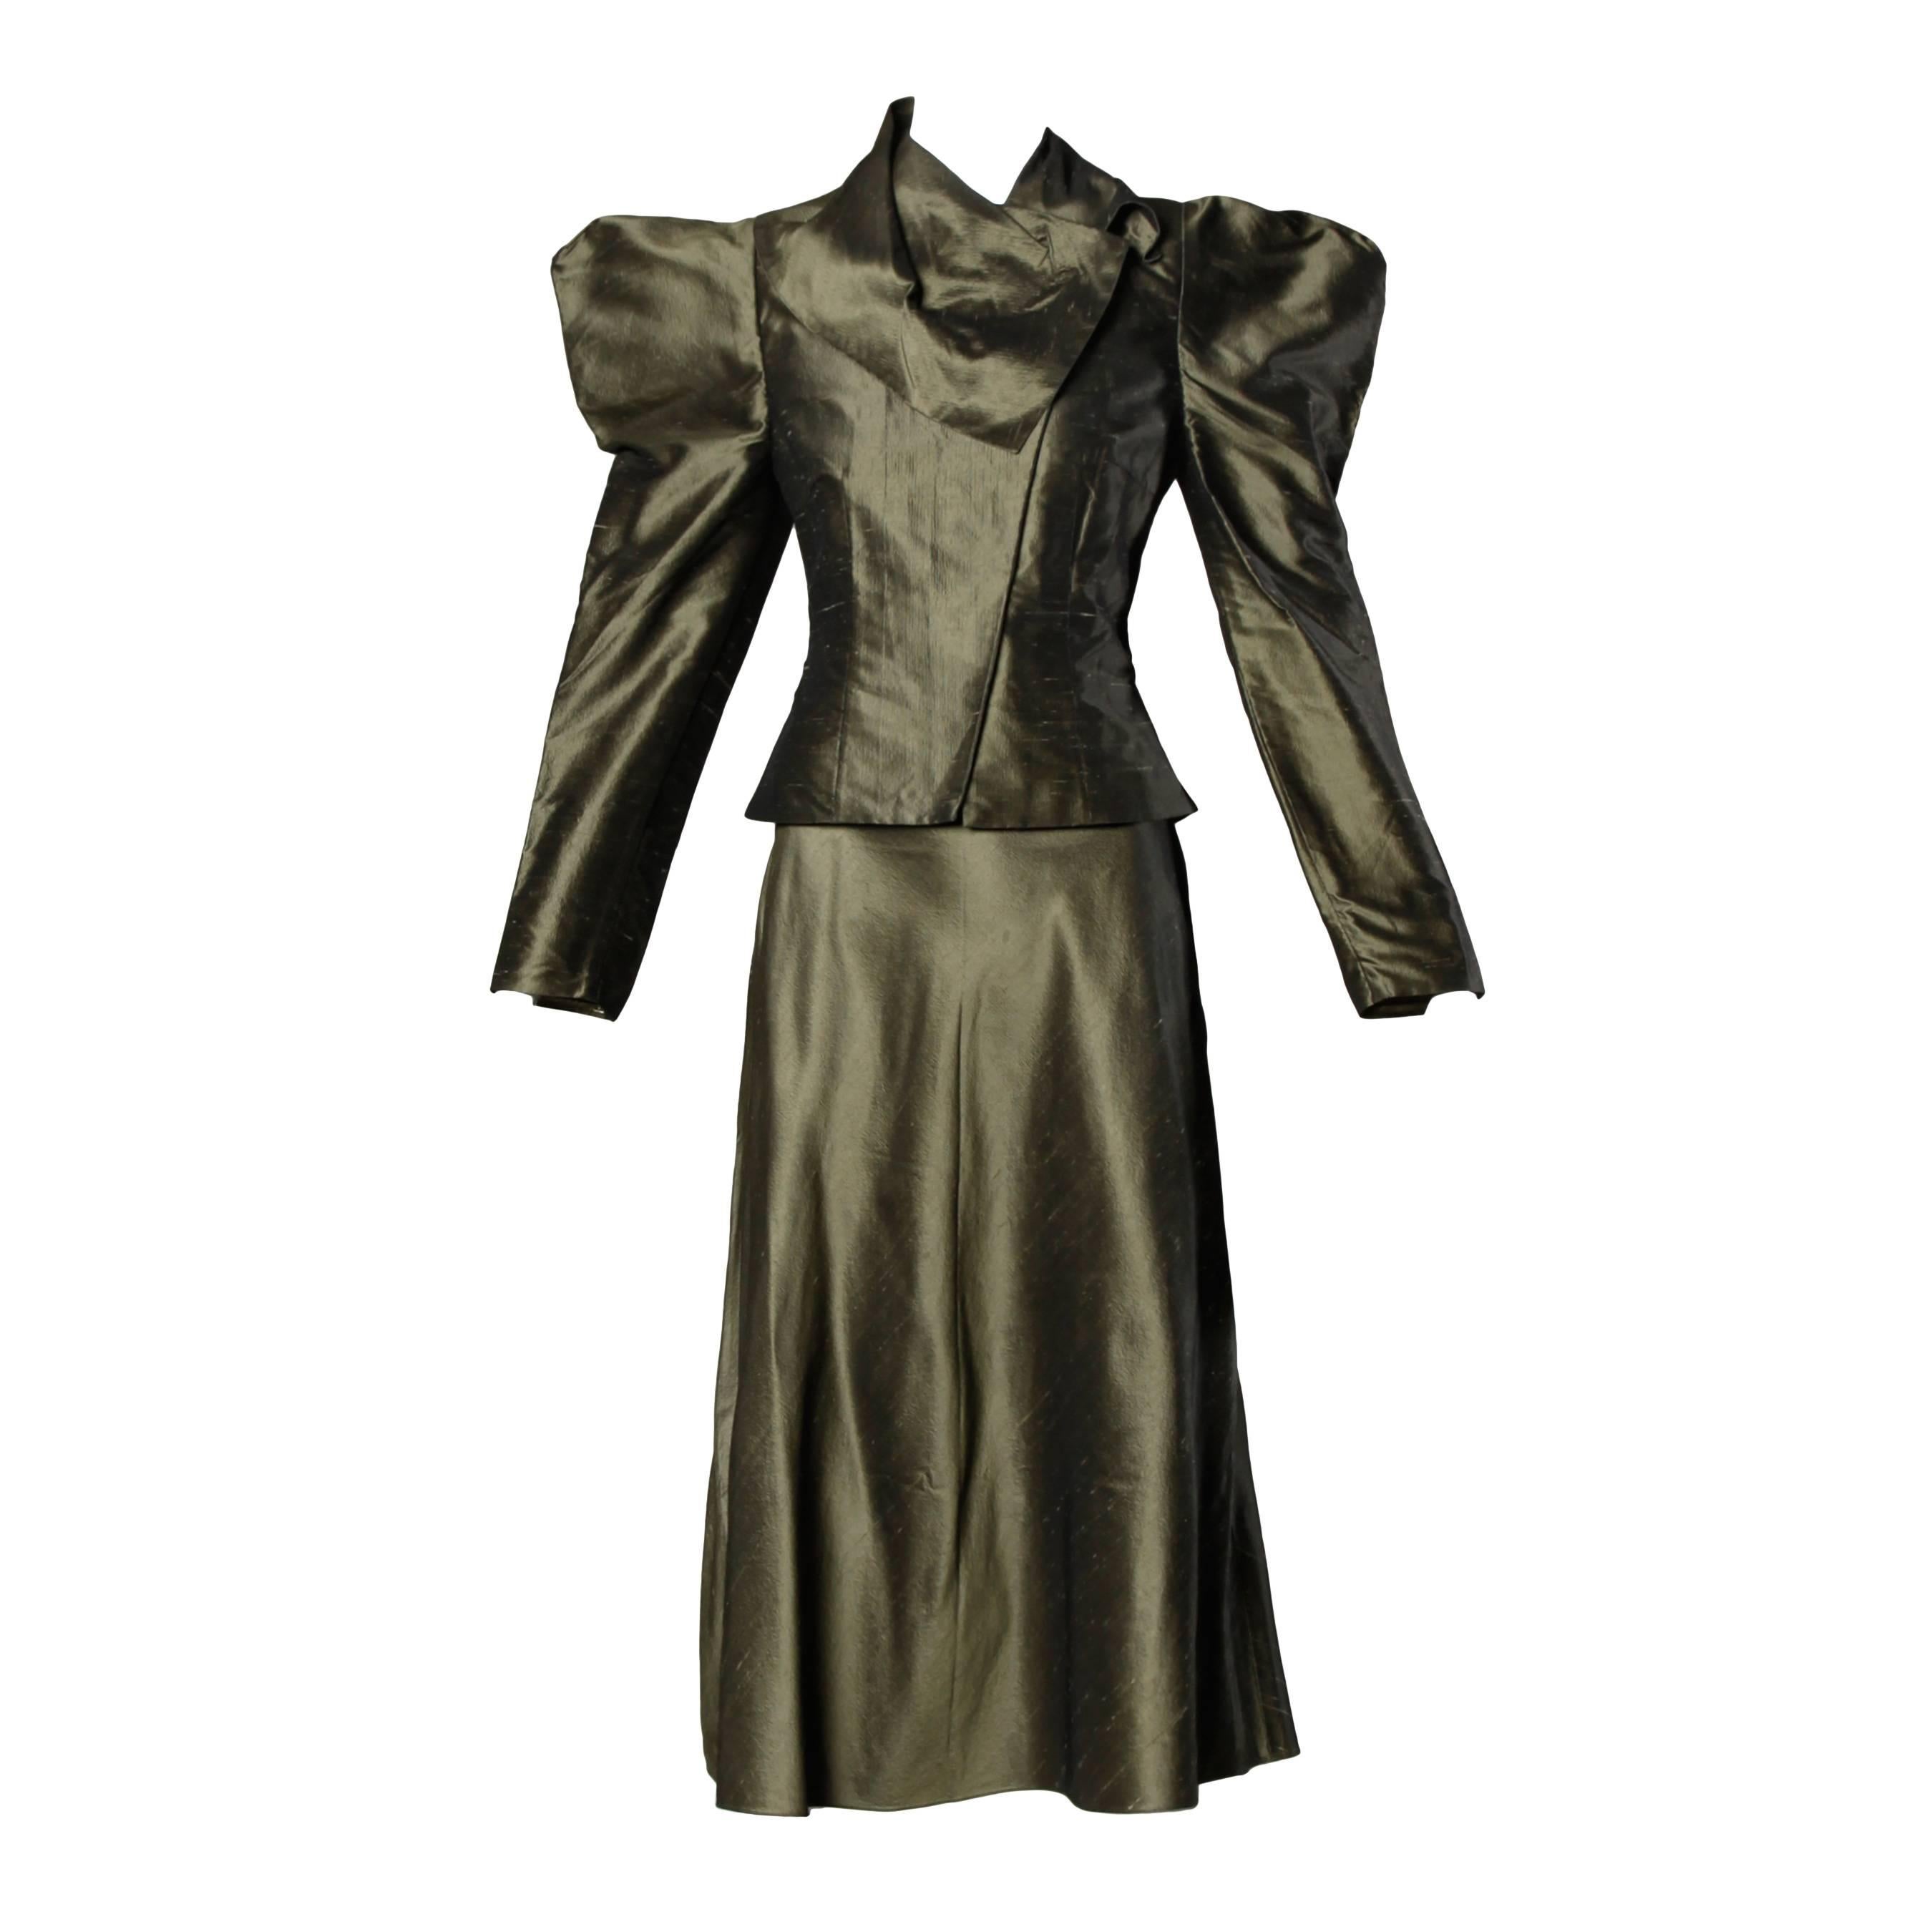 Chloe Avant Garde Olive Green Silk Jacket + Skirt Suit Ensemble